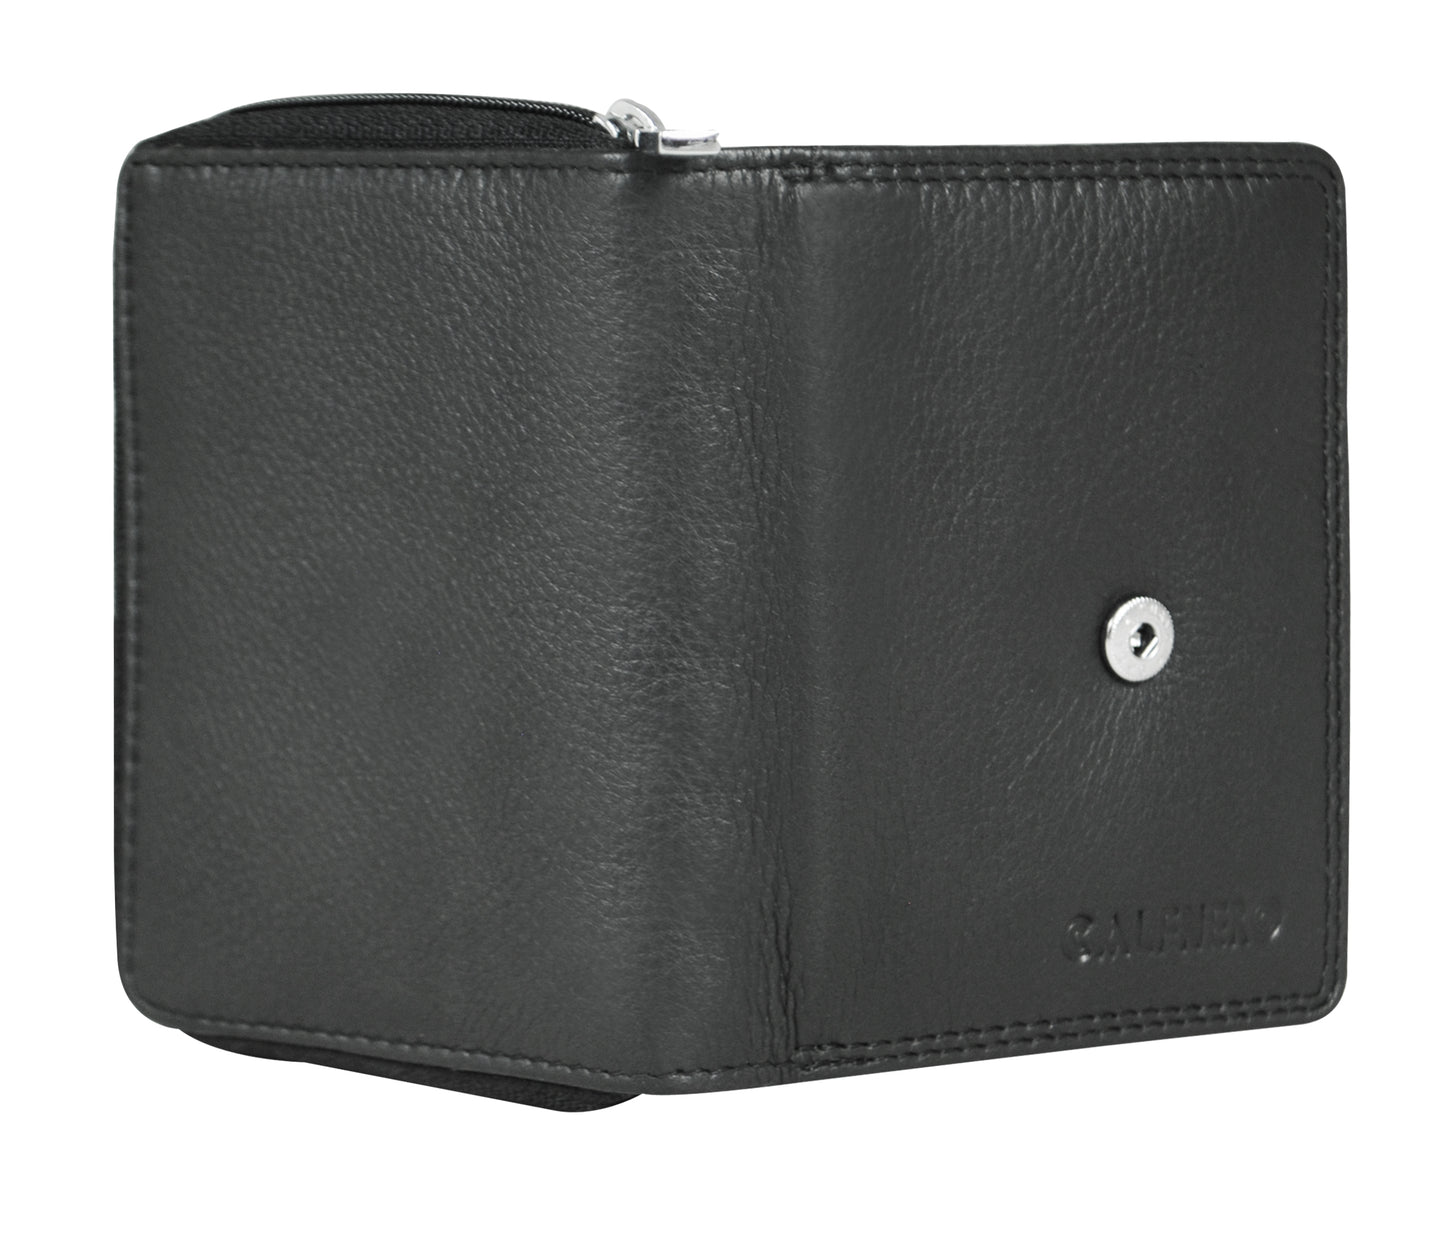 Calfnero Genuine Leather Women's Wallet (AK-81-BLACK)